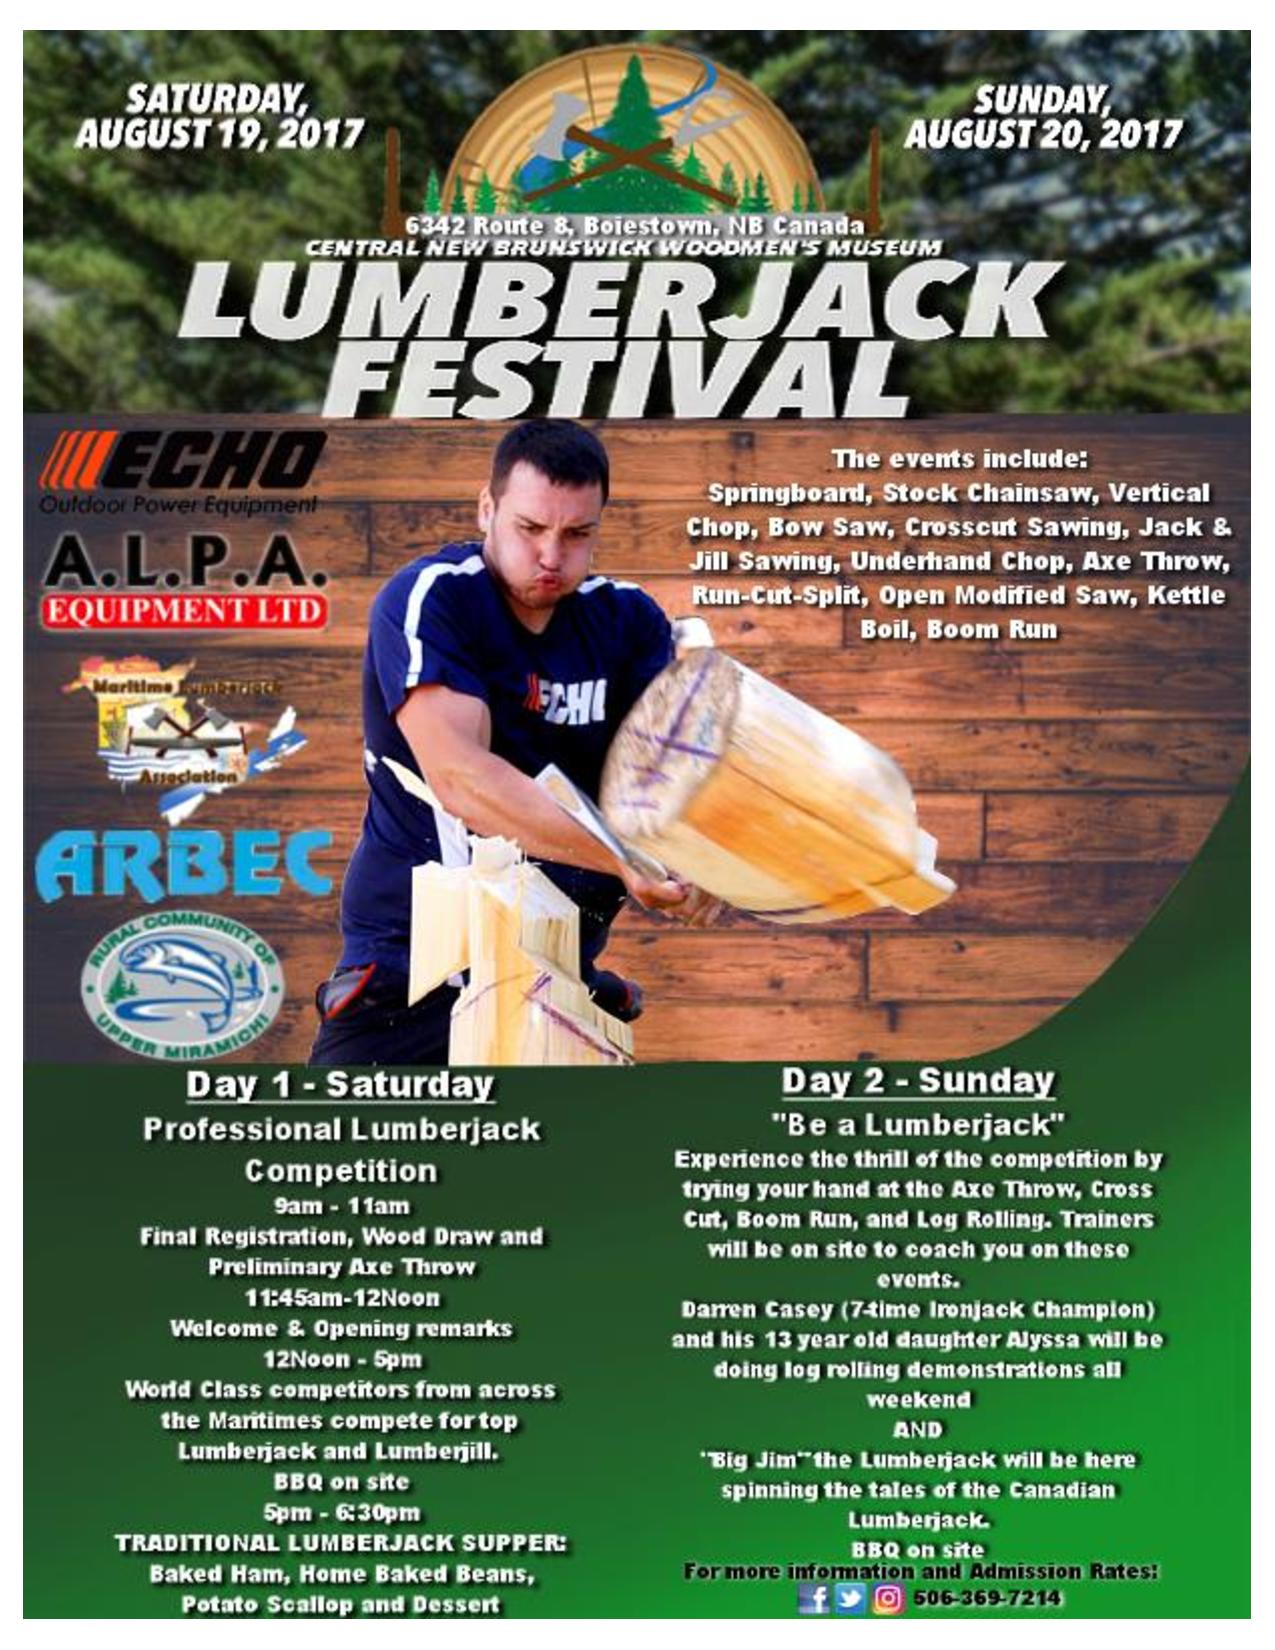 Lumberjacks are Gathering in Boiestown for Lumberjack Festival at the Woodmen’s Museum